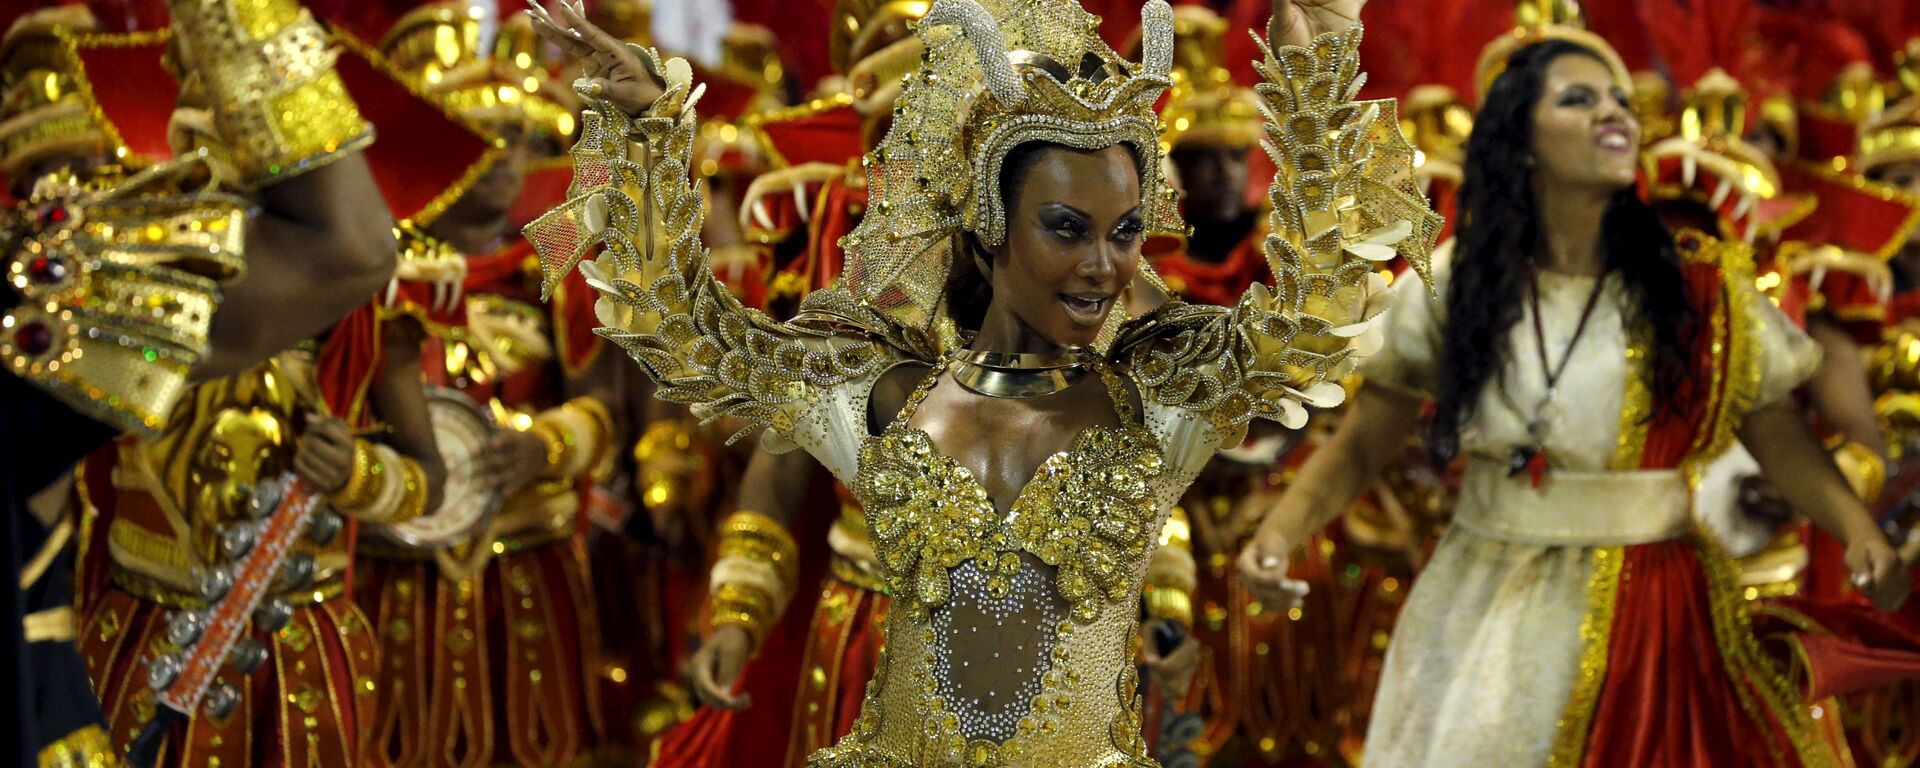 Estacio de Sa samba schooll's Drum Queen Luana Bandeira performs during the carnaval parade at the Sambadrome in Rio de Janeiro's Sambadrome February 7, 2016. - Sputnik Mundo, 1920, 04.10.2021